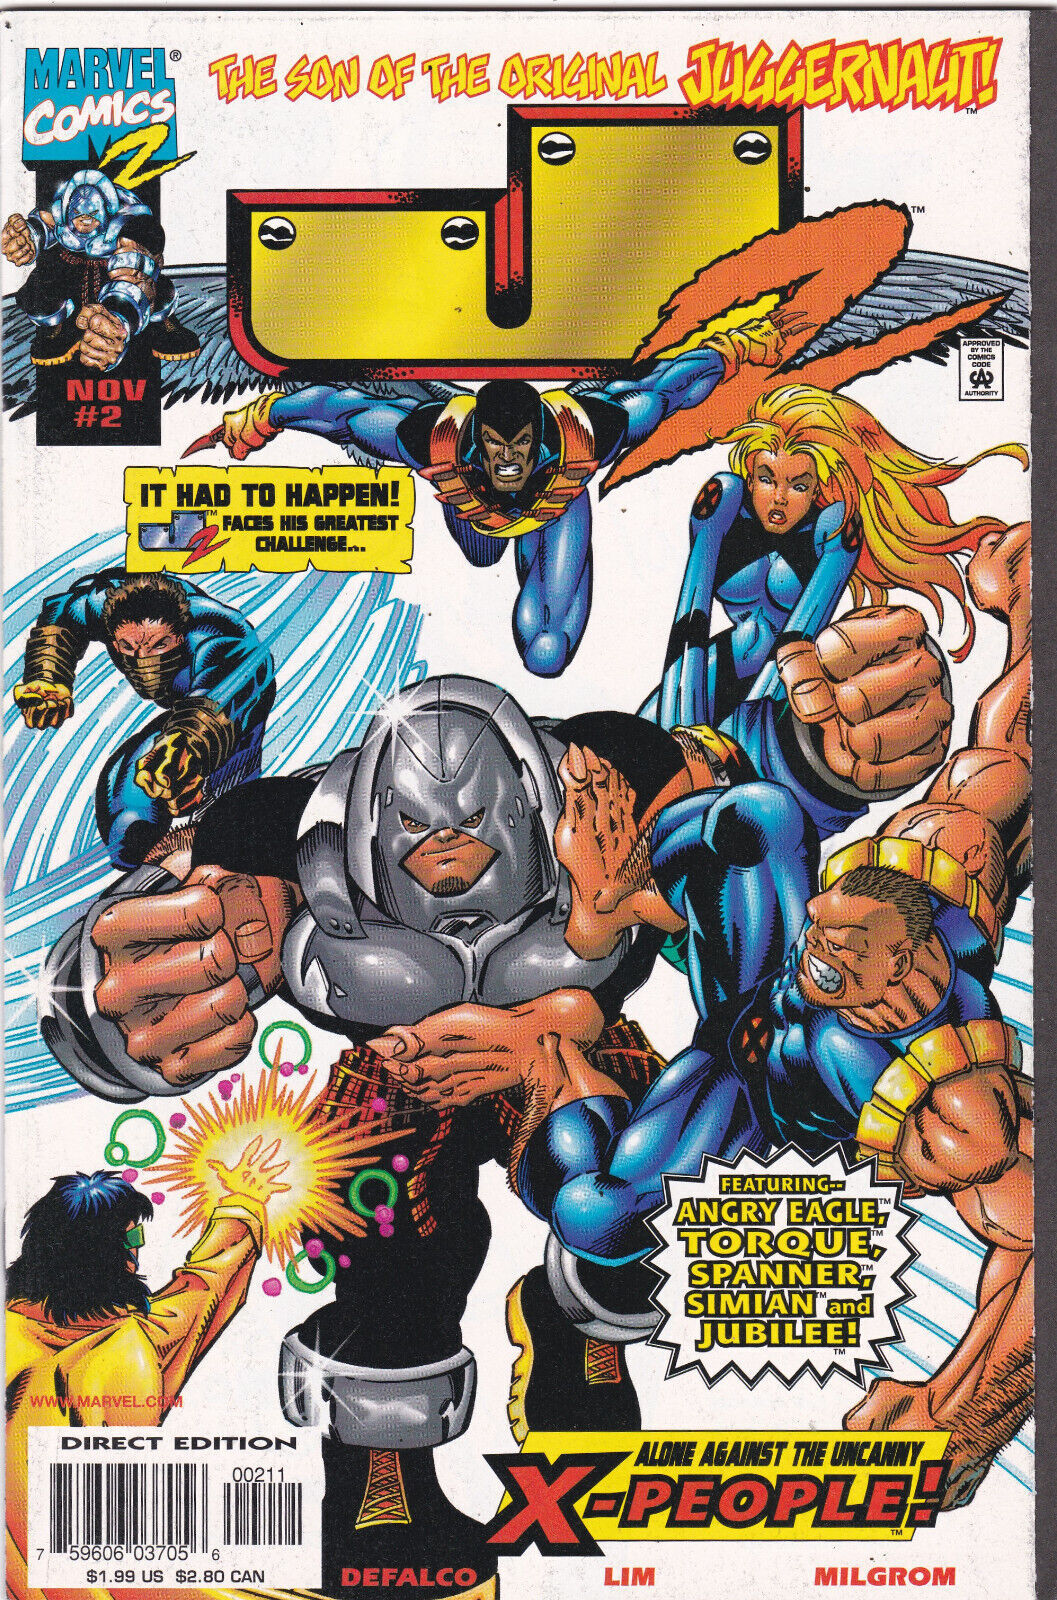 J2 #2 (Marvel,  1998) Son of the Original Juggernaut DeFalco, Lim & Milgrom